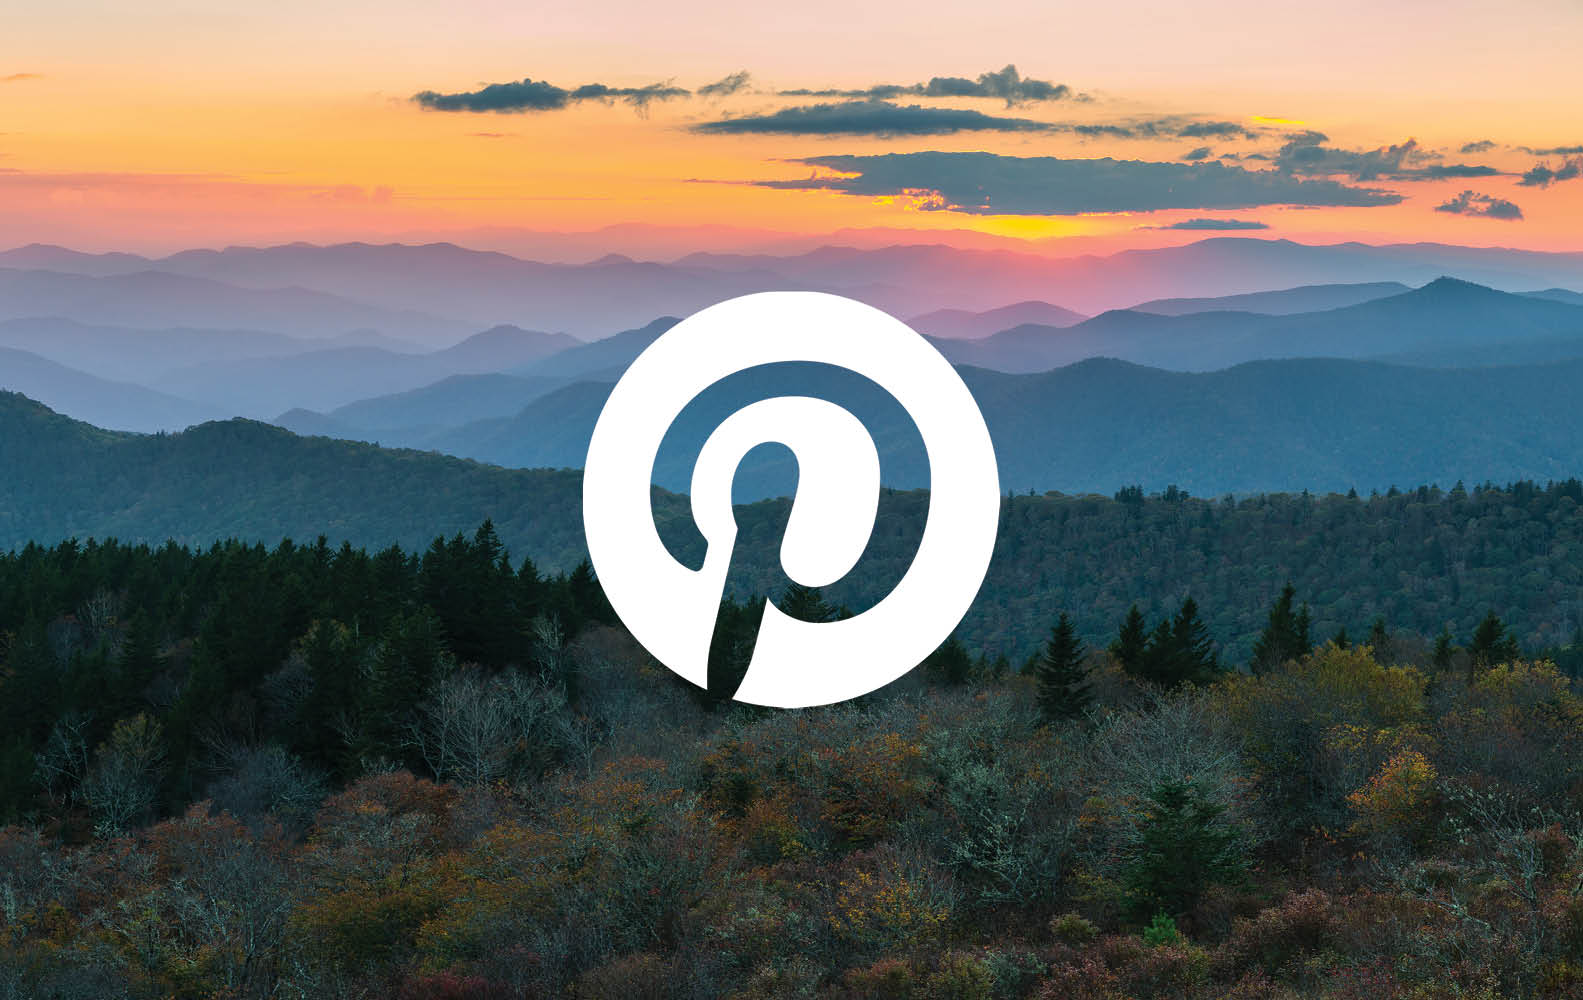 mountains with pinterest logo